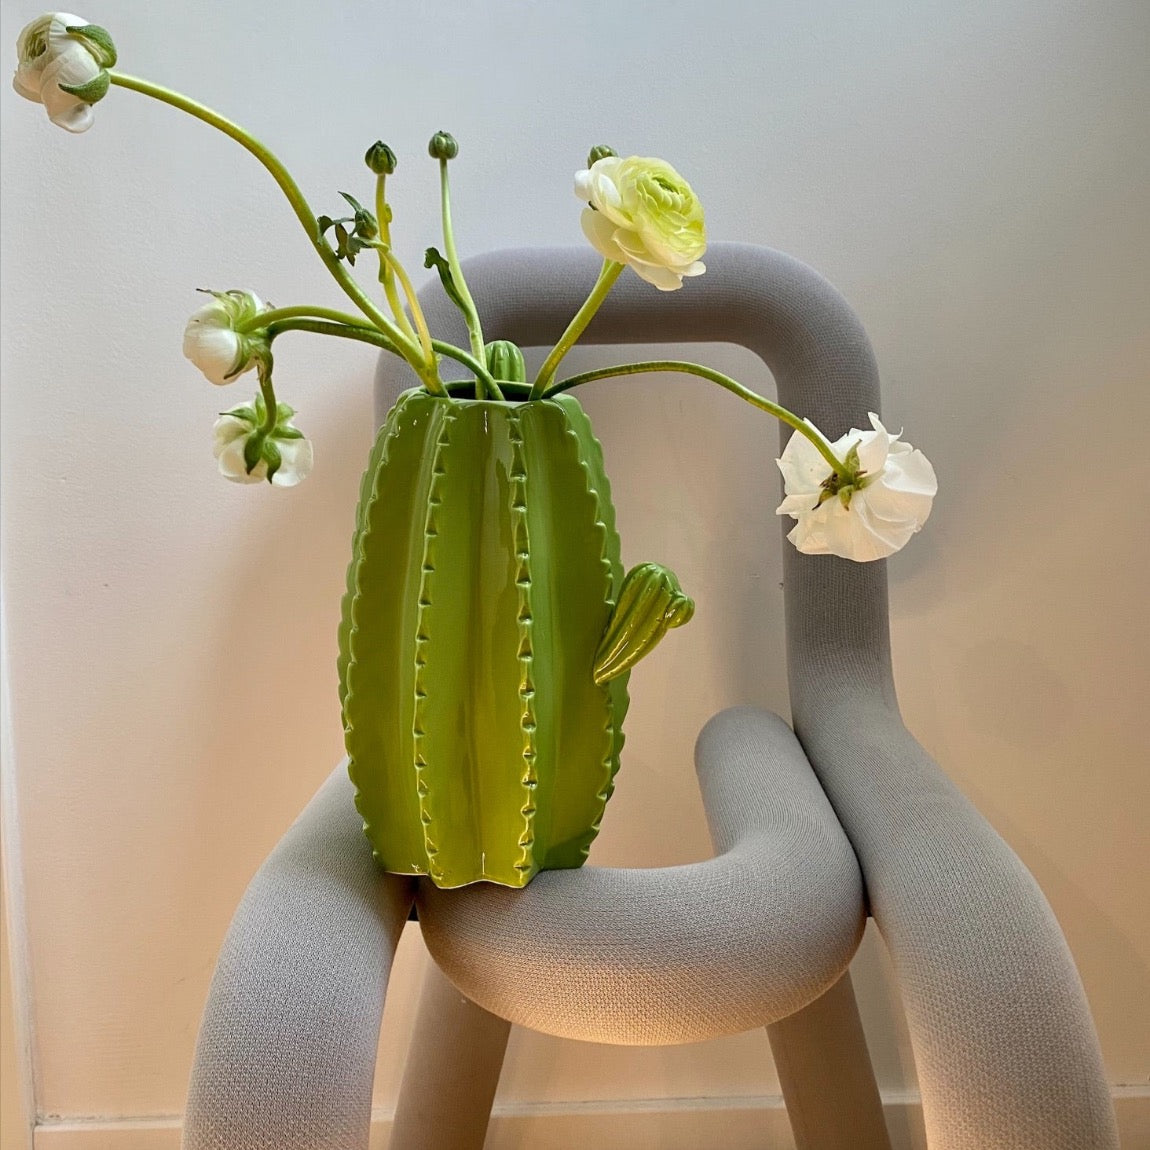 Vase oder Kaktus?